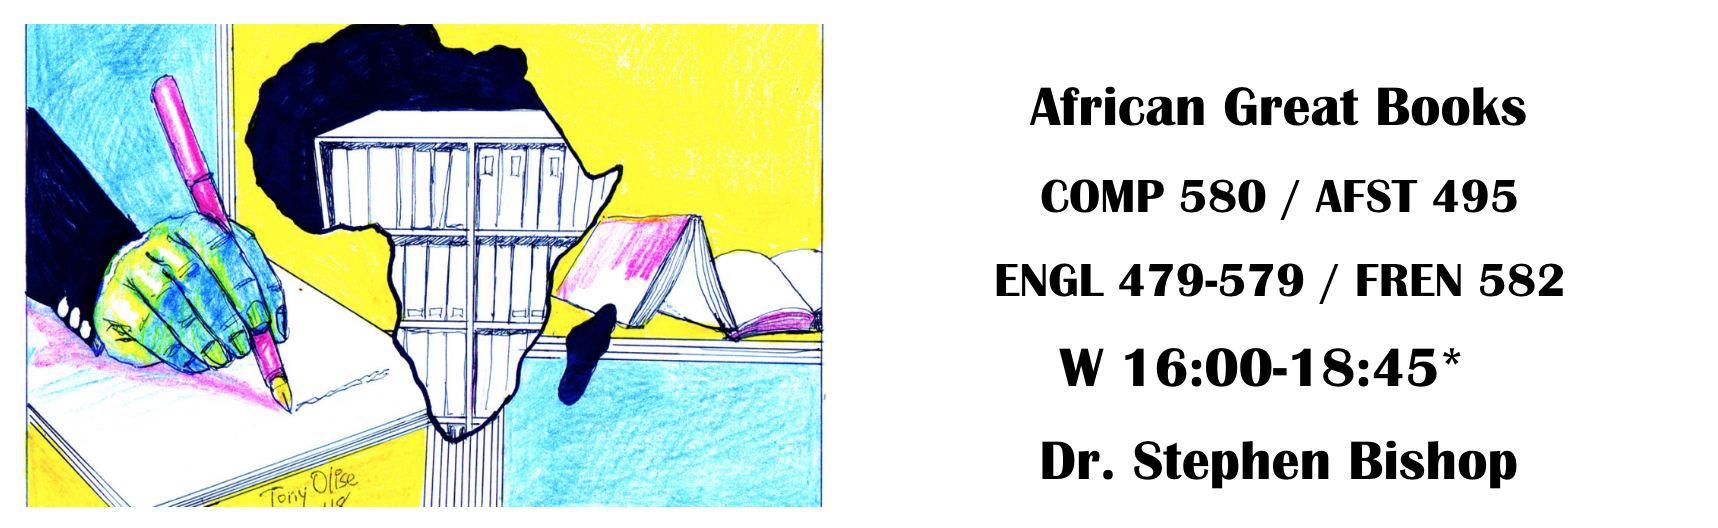 african-great-books-jpg